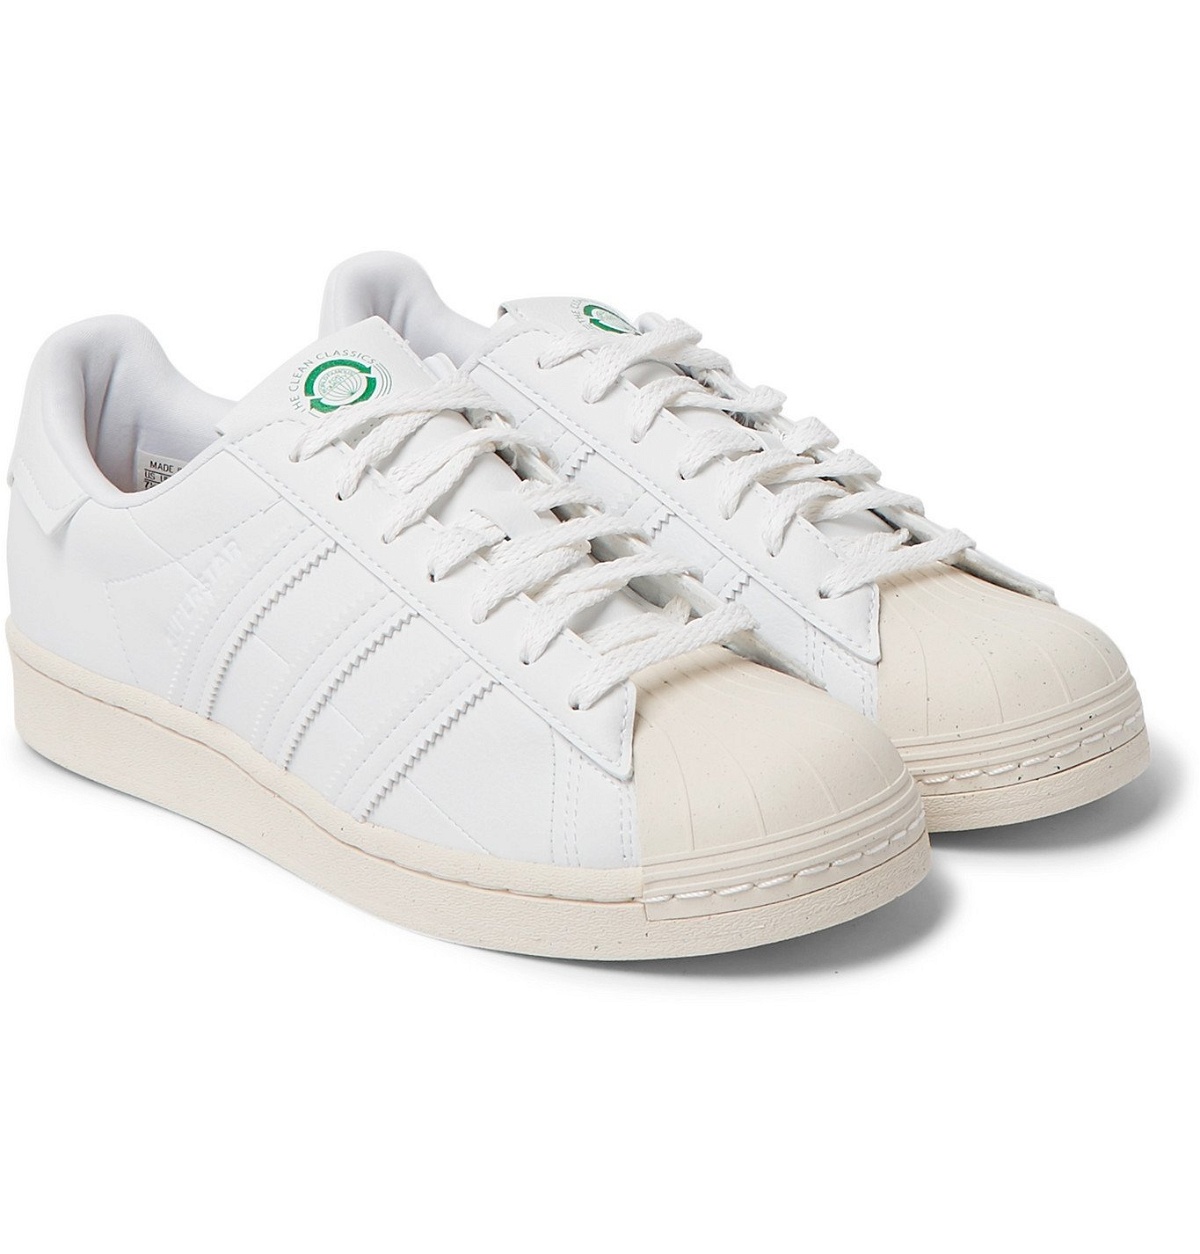 Vegan White adidas Clean - Originals Sneakers adidas Alexander by Classics Superstar Originals Leather Wang -